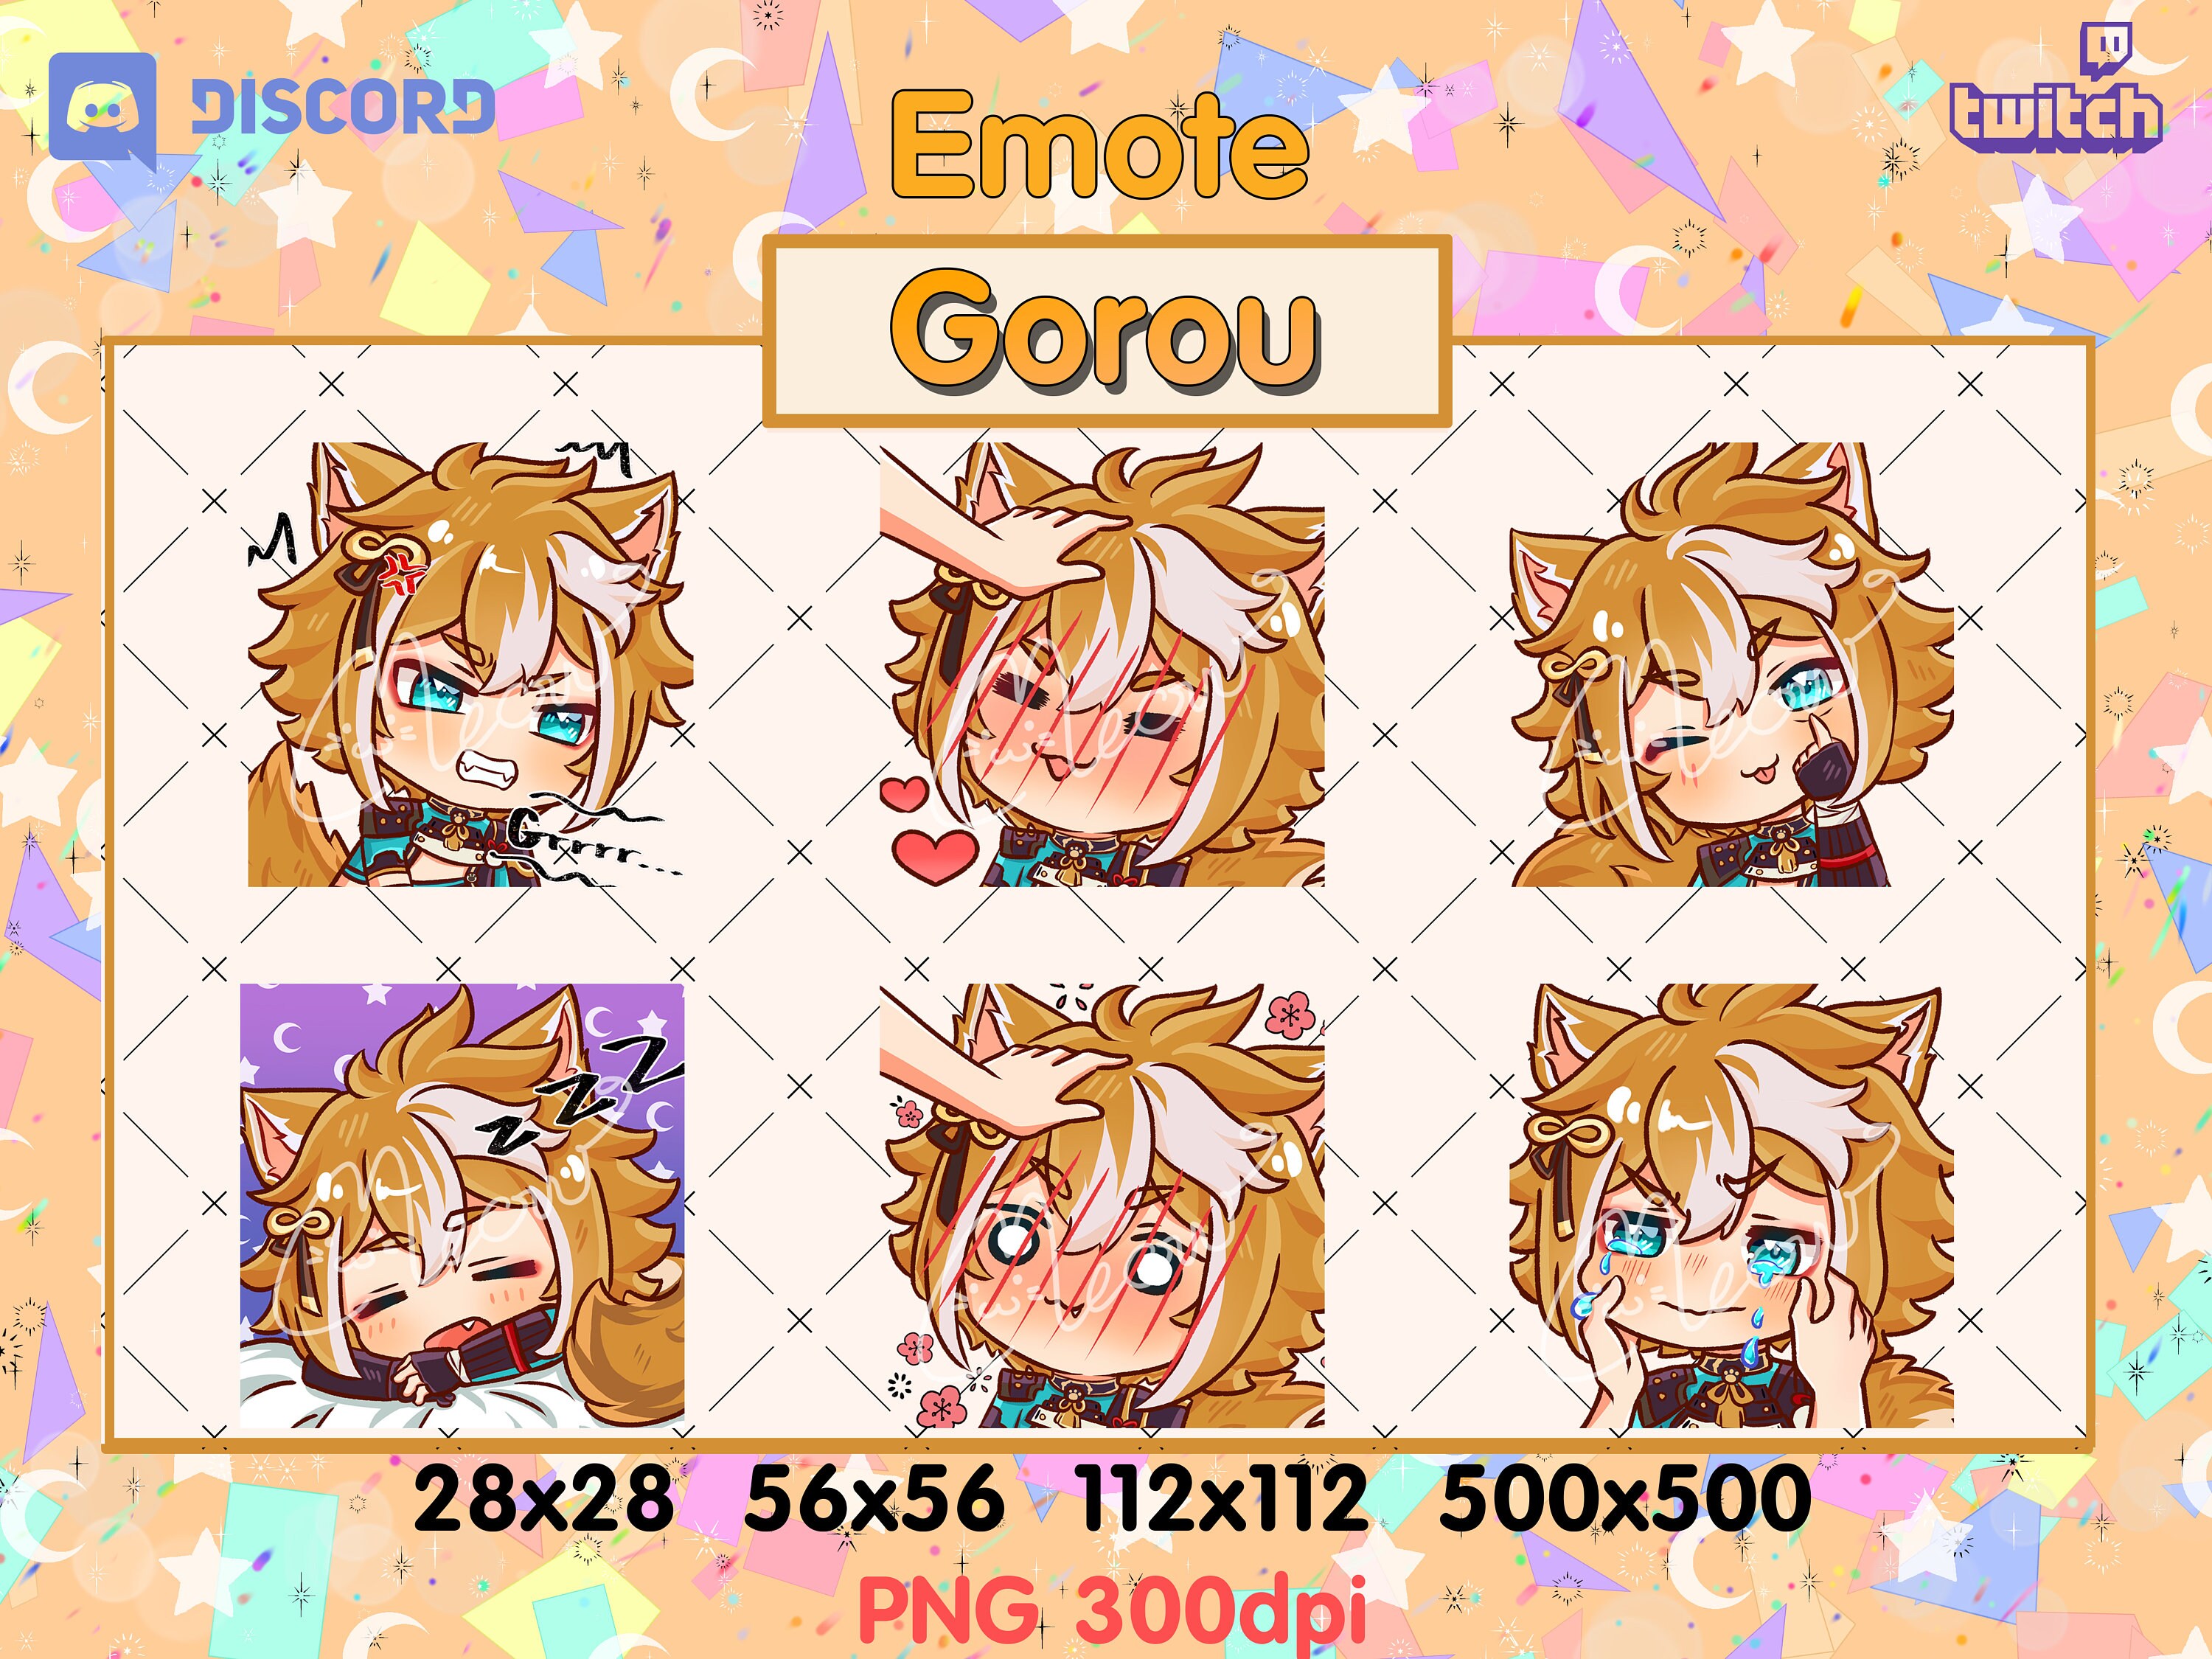 Genshin Impact Gorou Twitch Discord Stream Pack Gorou 3 Pack Emotes Cute Twitch emotes